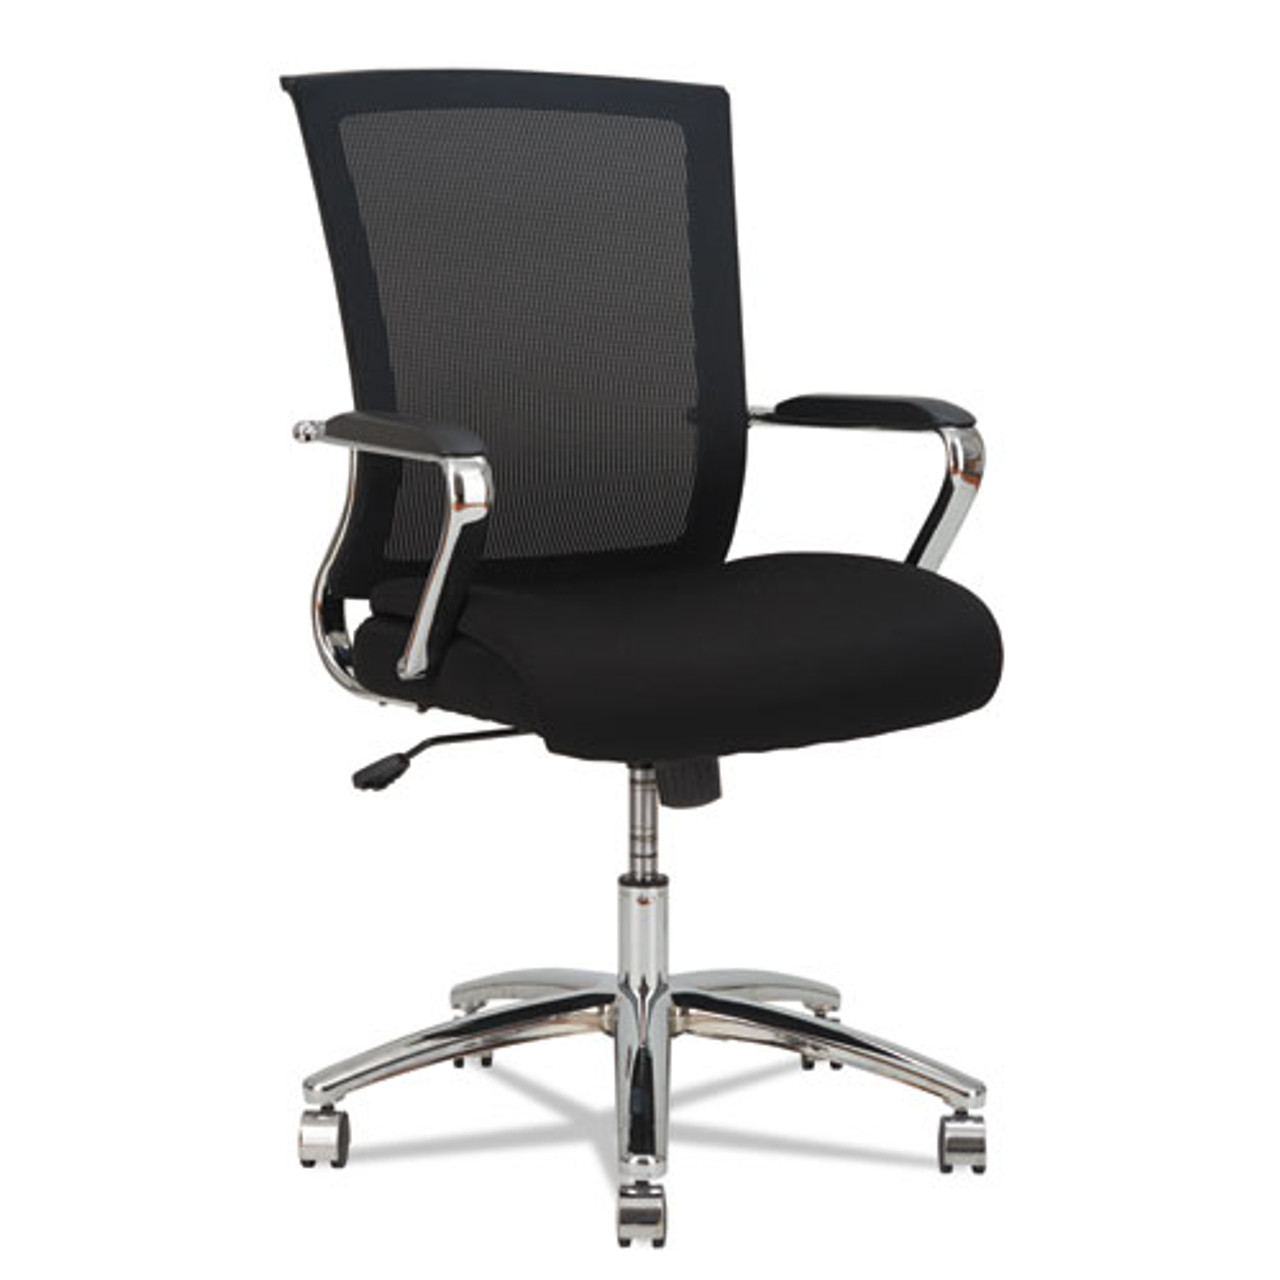 Alera Enr Series Mid-Back Slim Profile Mesh Chair, Black/chrome, #AL-1105